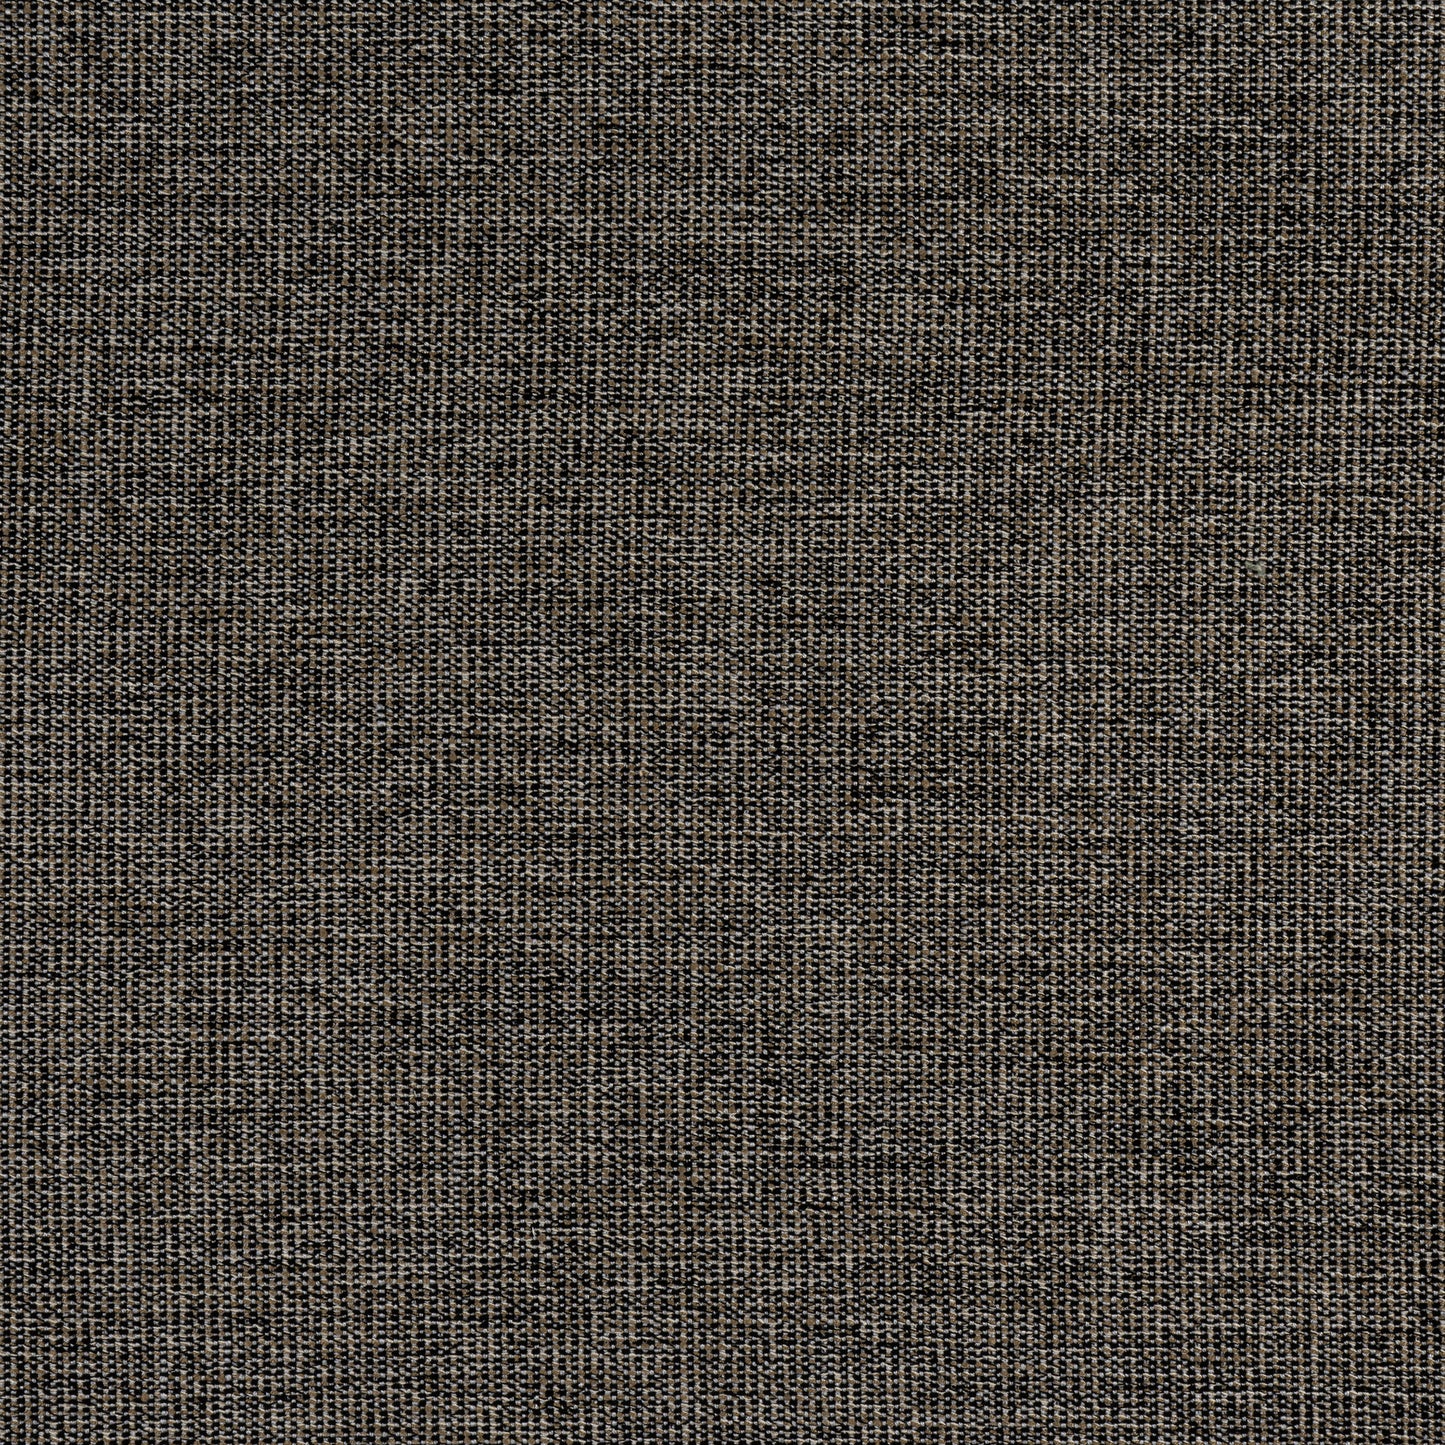 Purchase Thibaut Fabric SKU W8758 pattern name Sacchi color Ebony